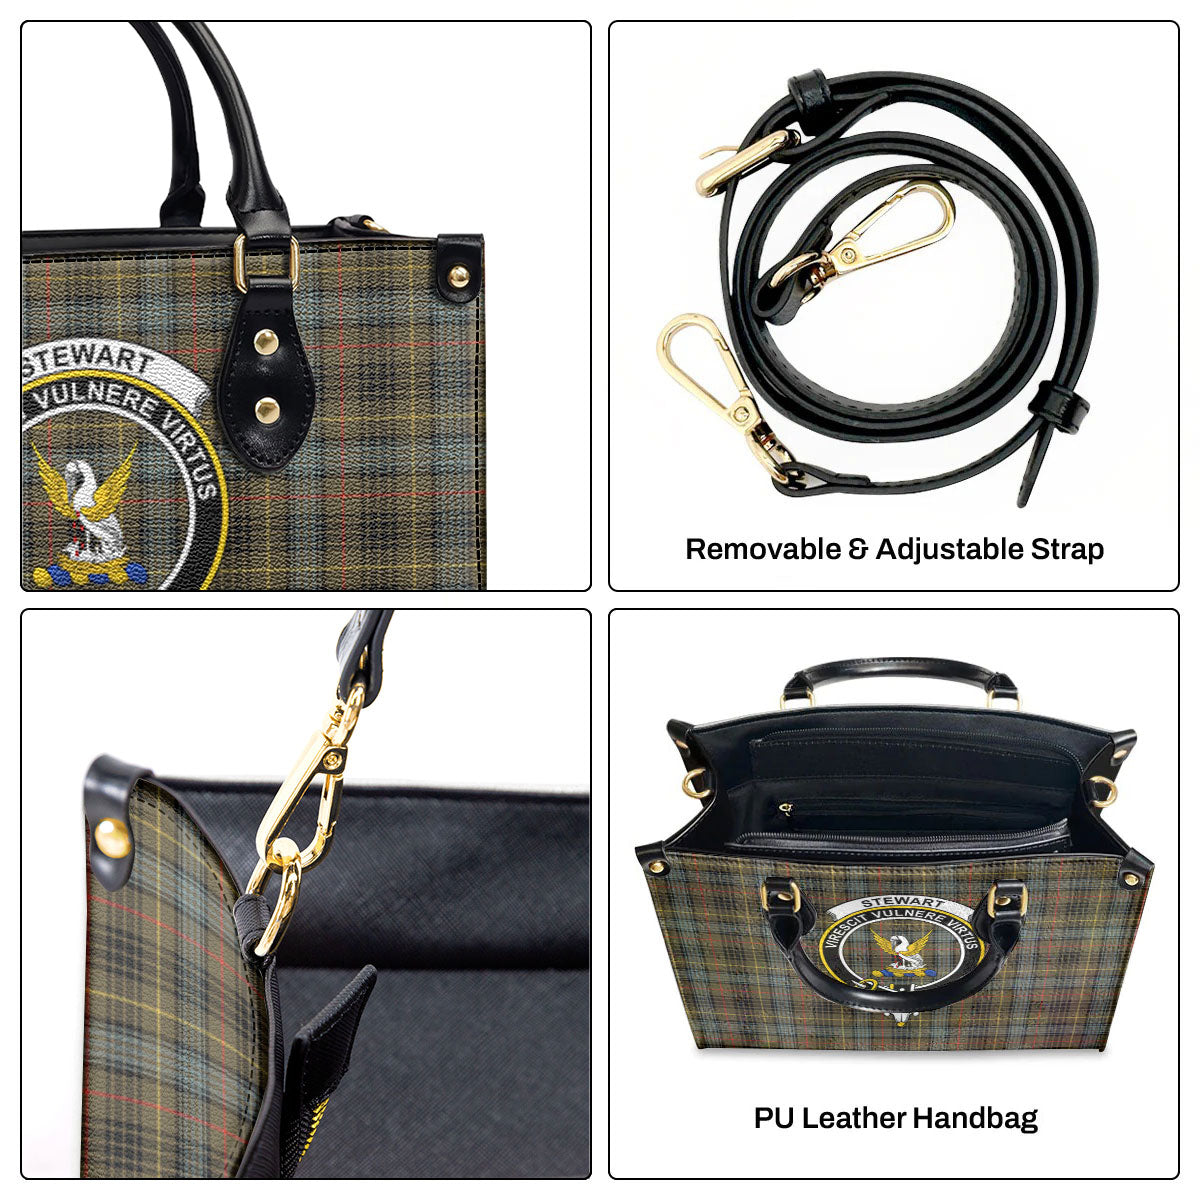 Stewart Hunting Weathered Tartan Crest Leather Handbag